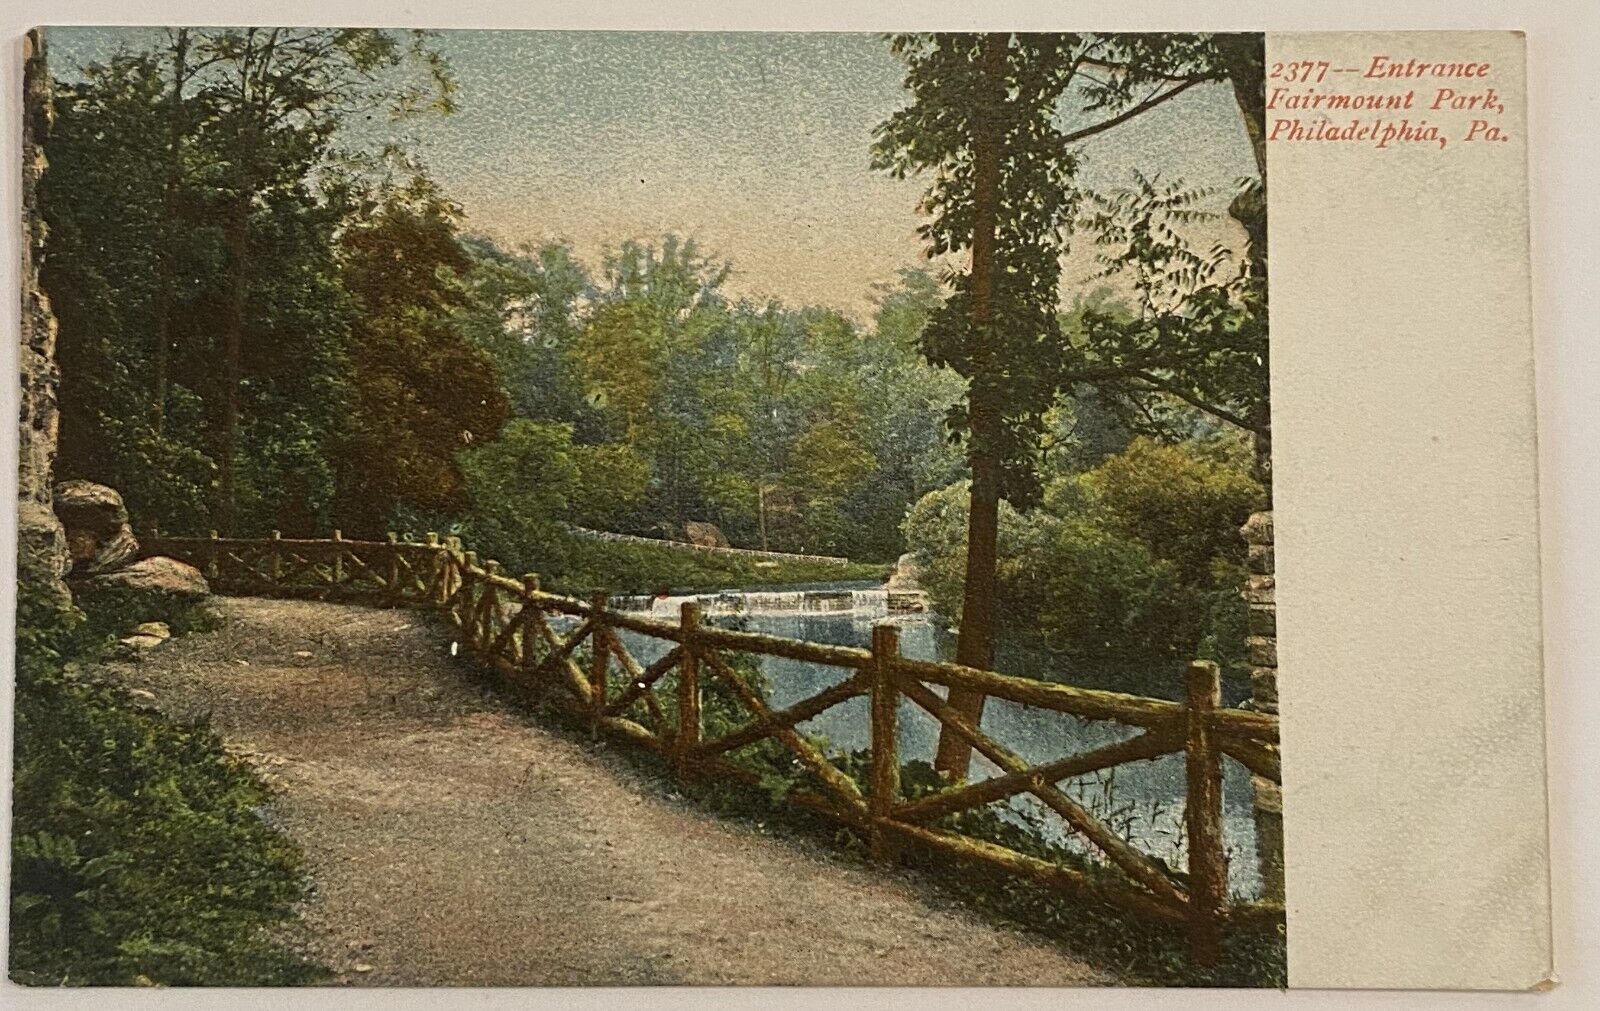 Postcard, Entrance Fairmount Park, Philadelphia, Pennsylvania, early 1900s